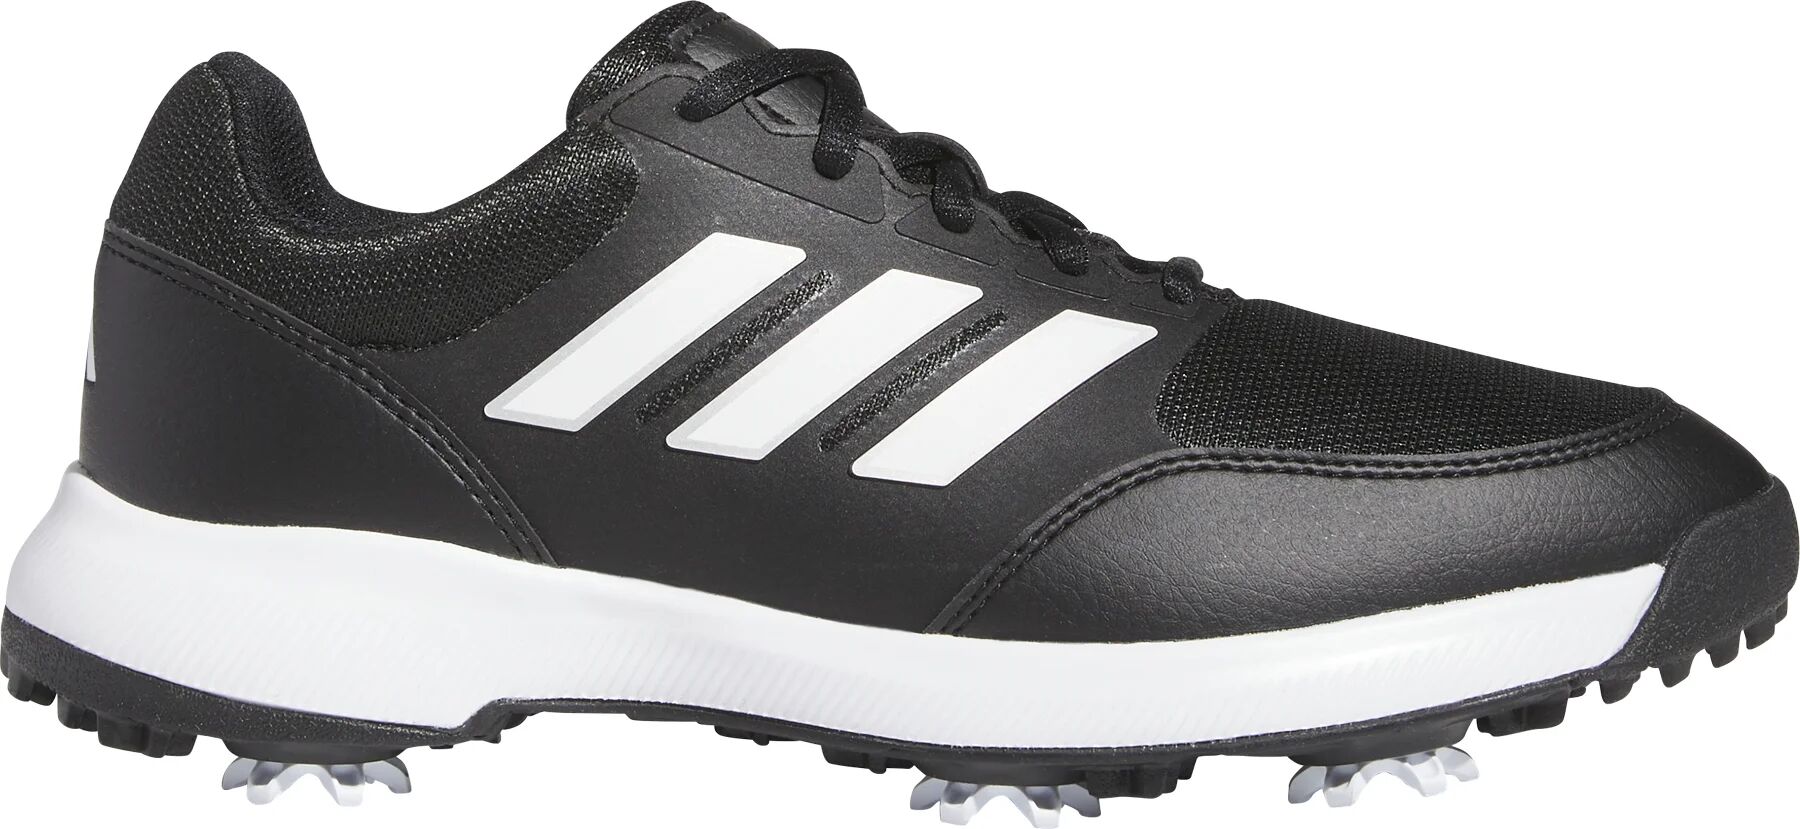 adidas Womens Tech Response 3.0 Golf Shoes - Core Black/Cloud White/Silver Metallic - 8 - MEDIUM